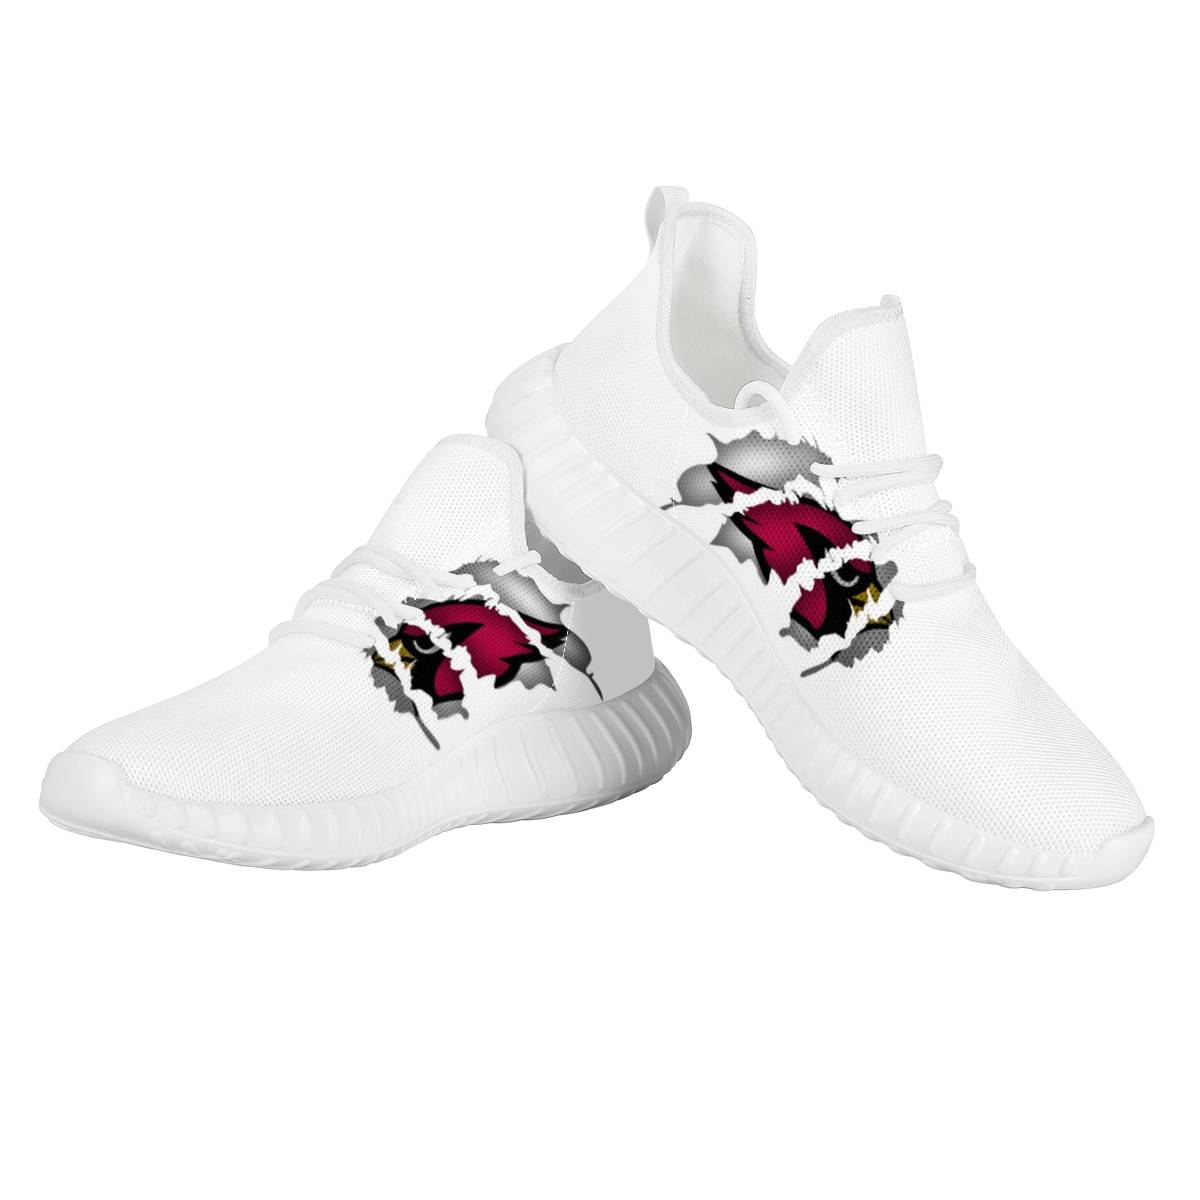 Men's Arizona Cardinals Mesh Knit Sneakers/Shoes 008